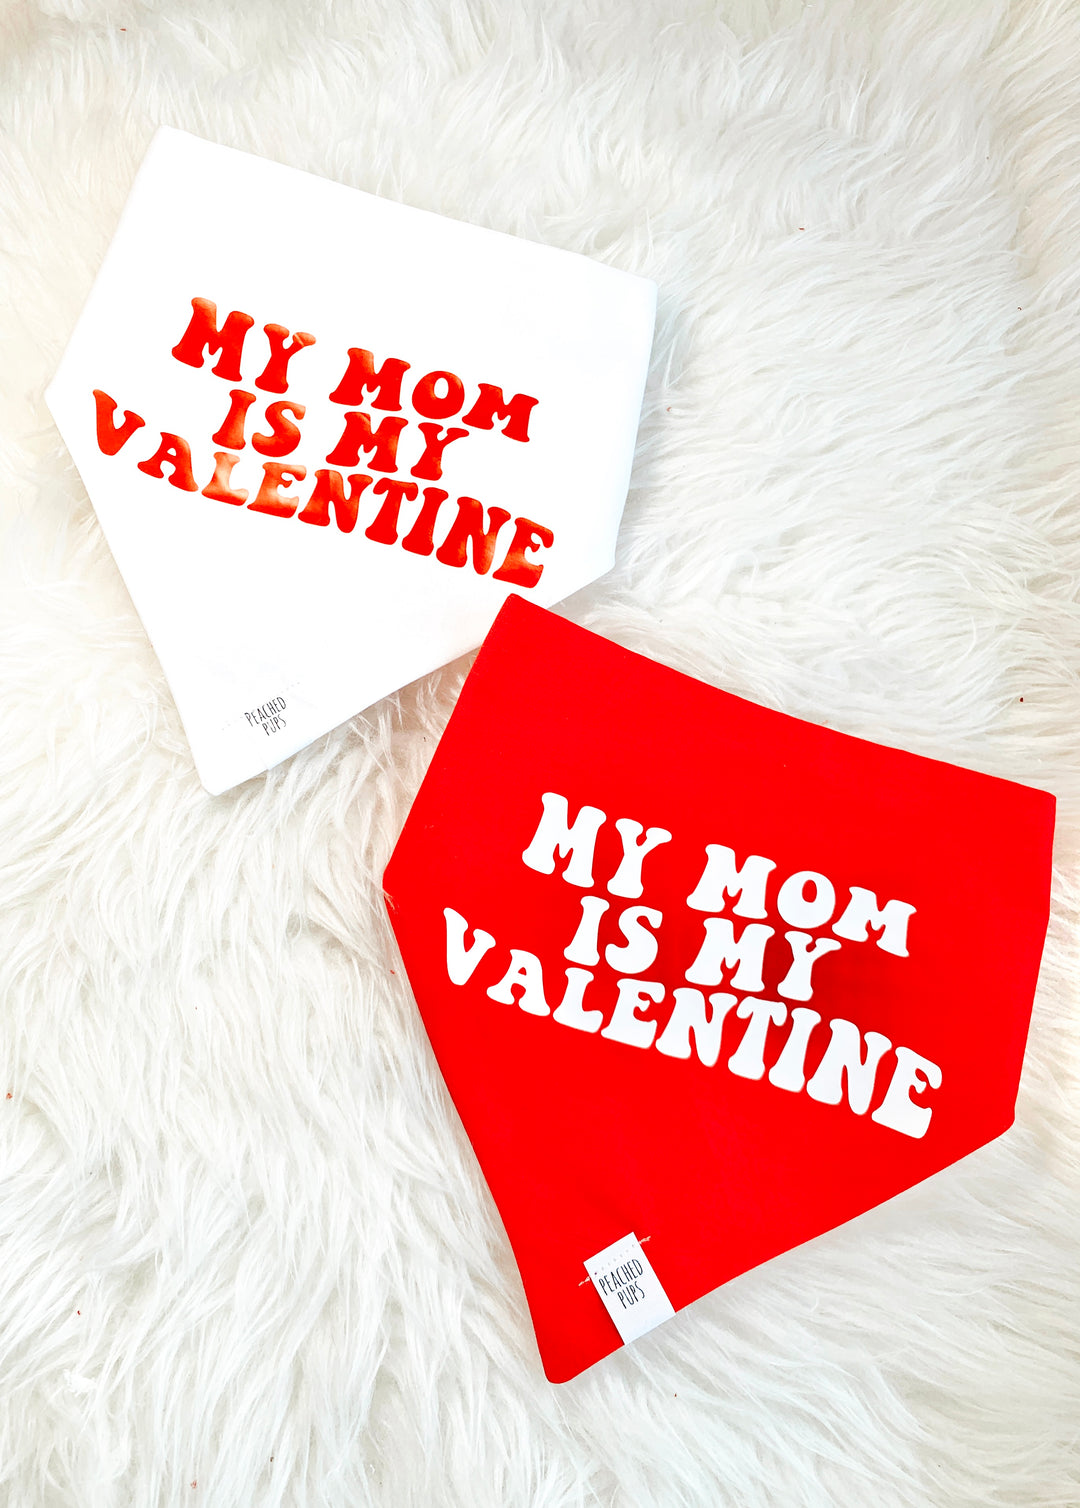 My Mom is My Valentine